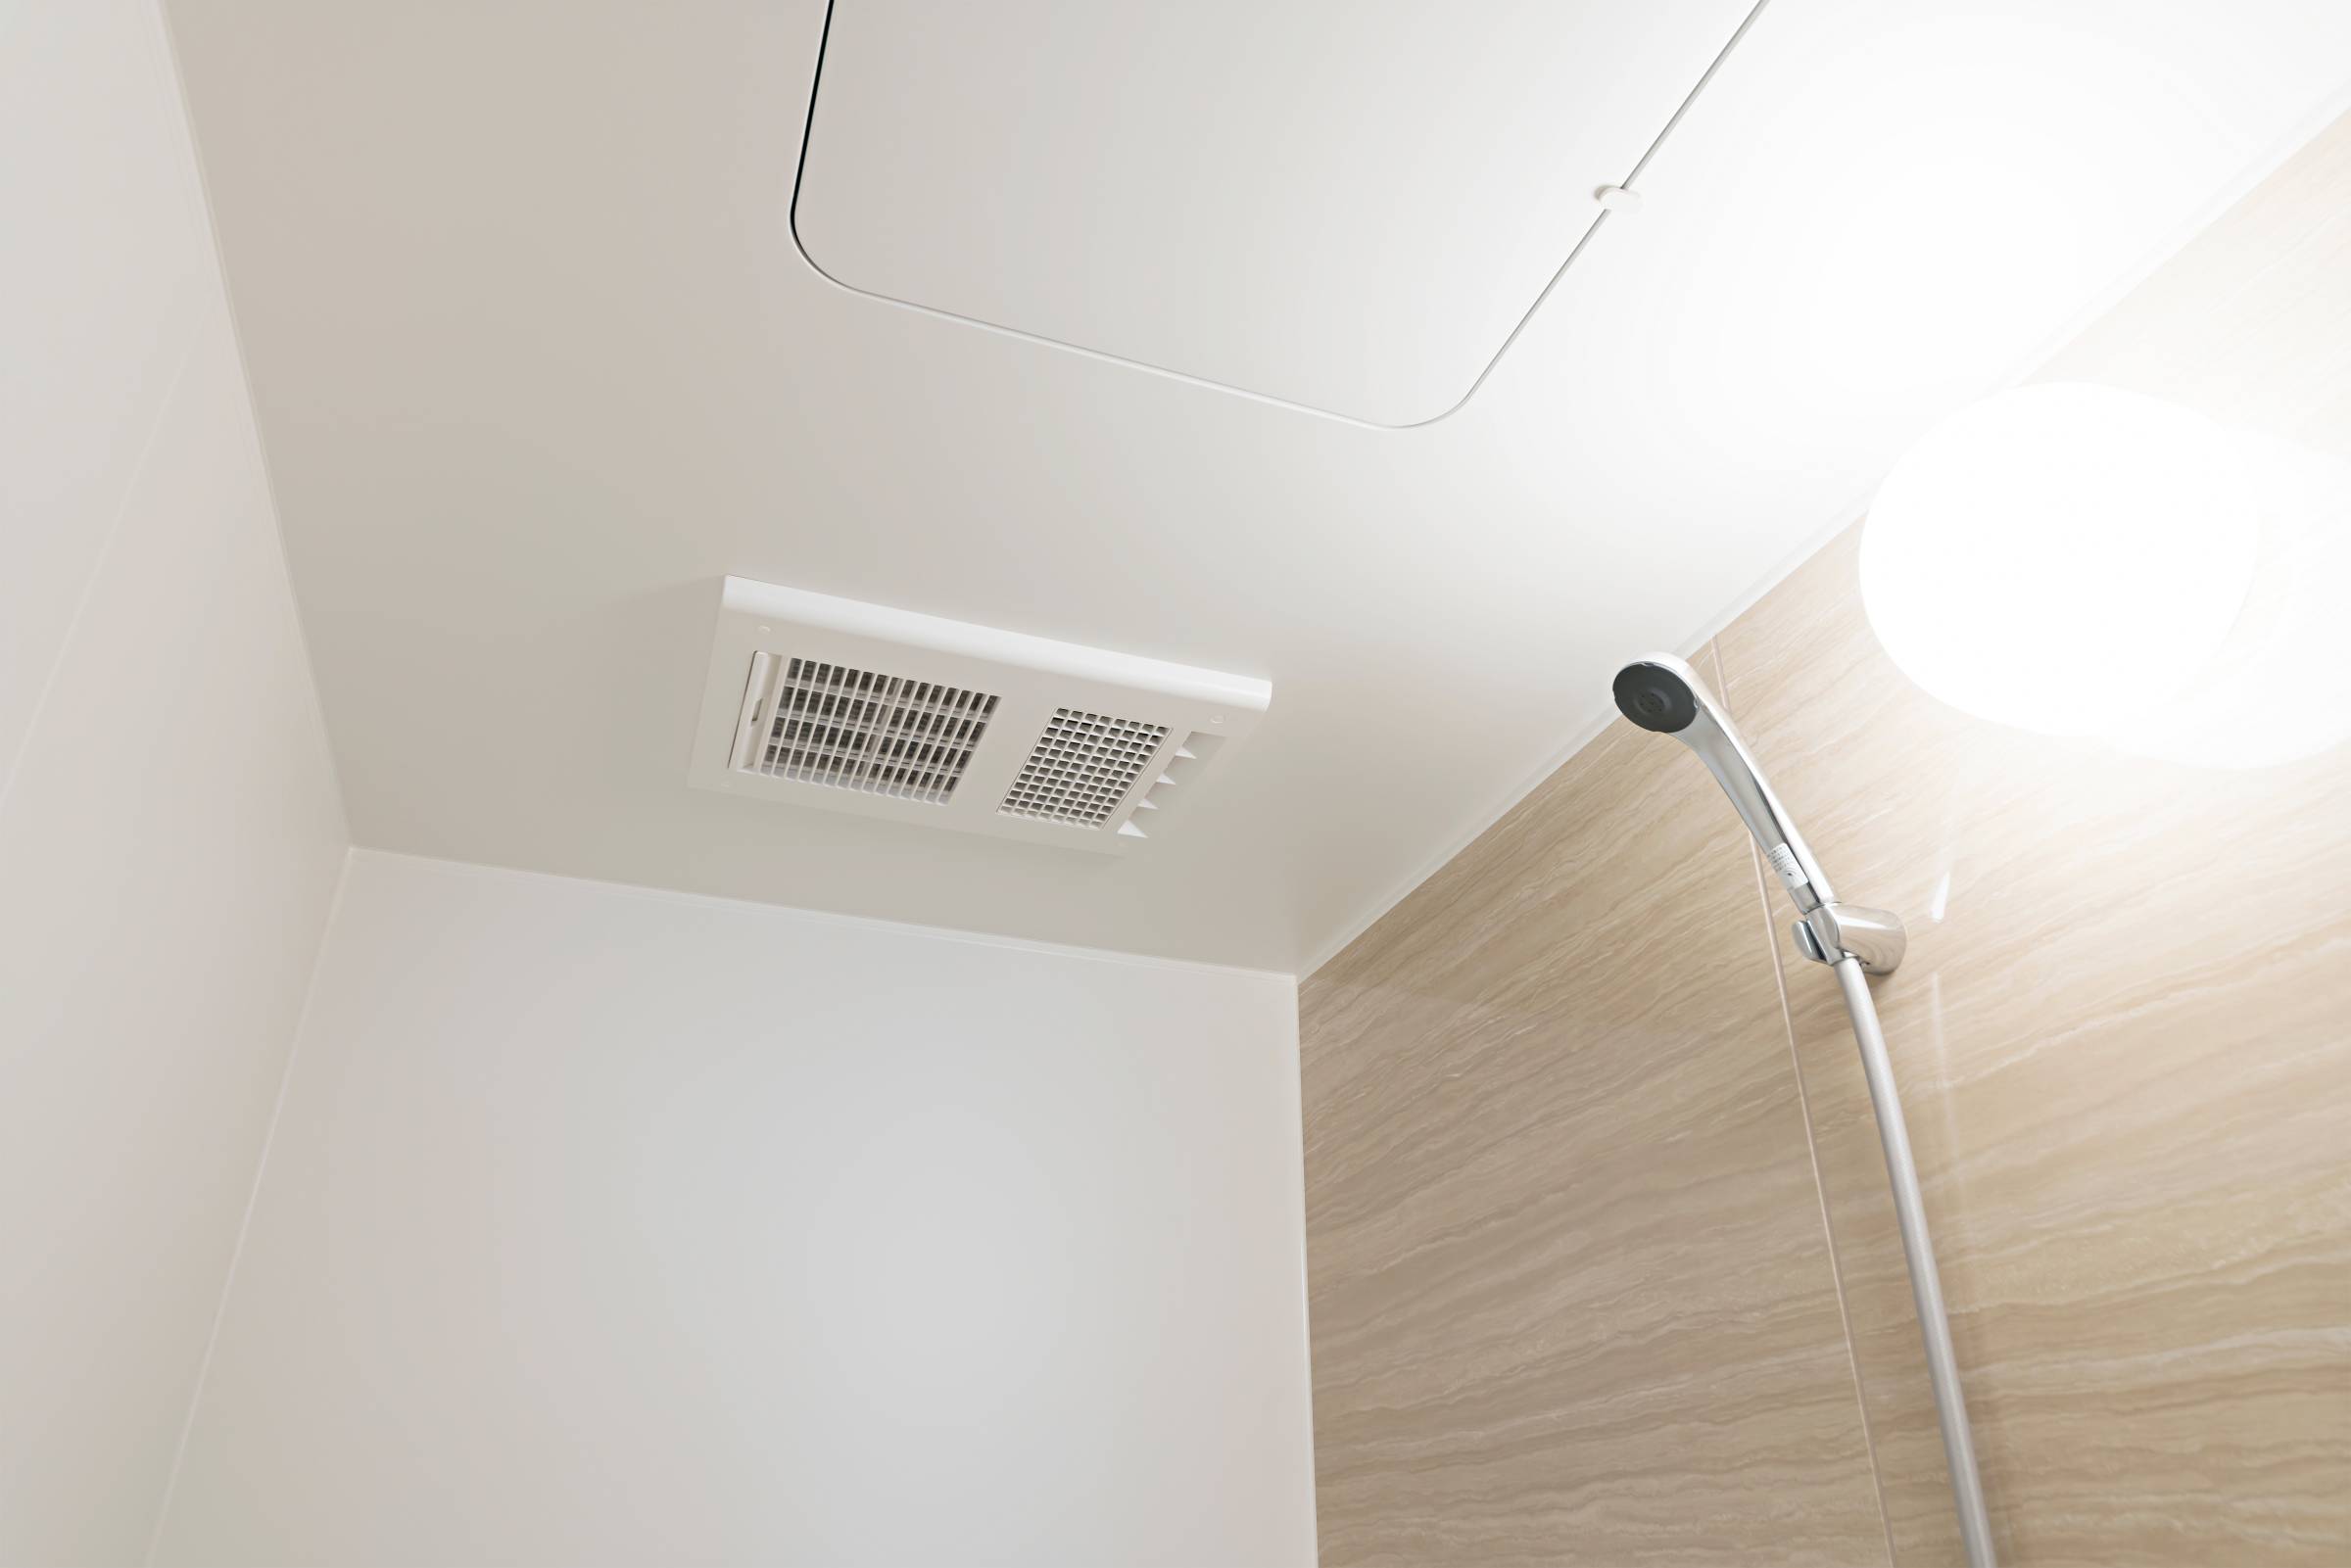 a small bathroom exhaust fan